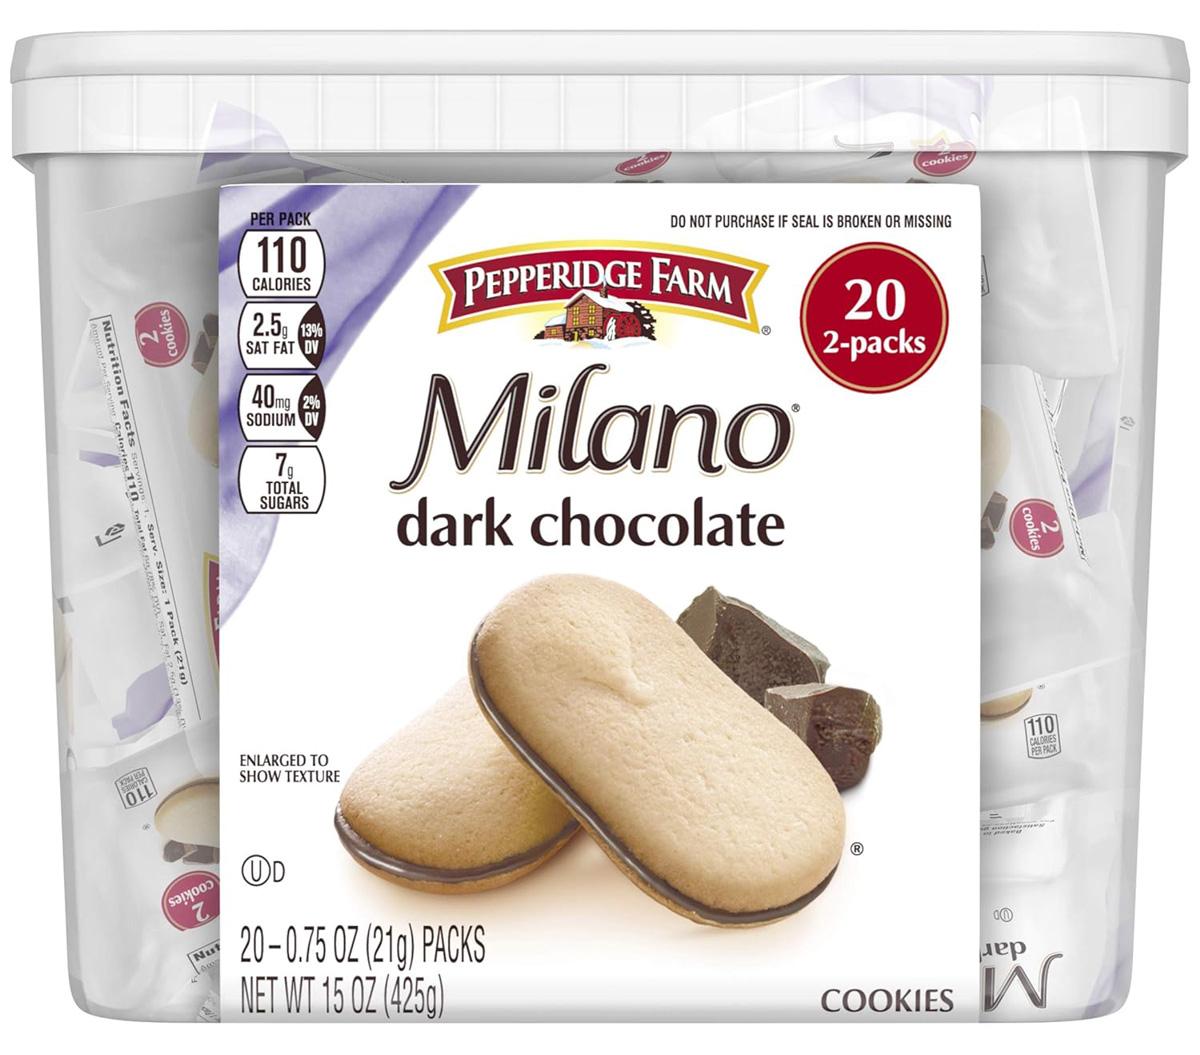 Pepperidge Farm Milano Dark Chocolate Cookies 20 Pack for $6.09